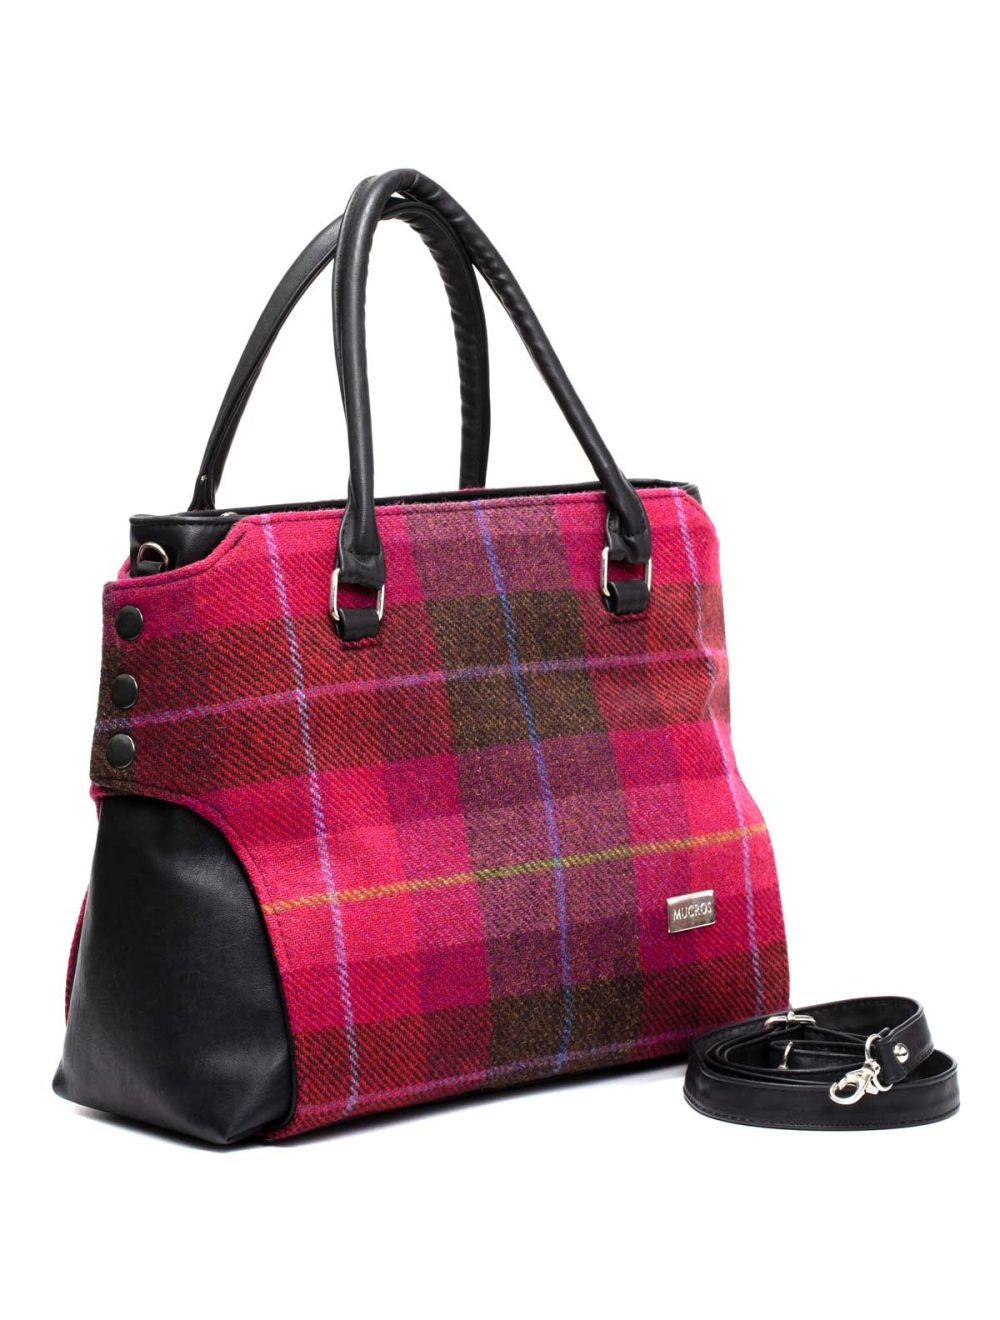 Vintage red tartan plaid bag purse handbag luggage - household items - by  owner - housewares sale - craigslist